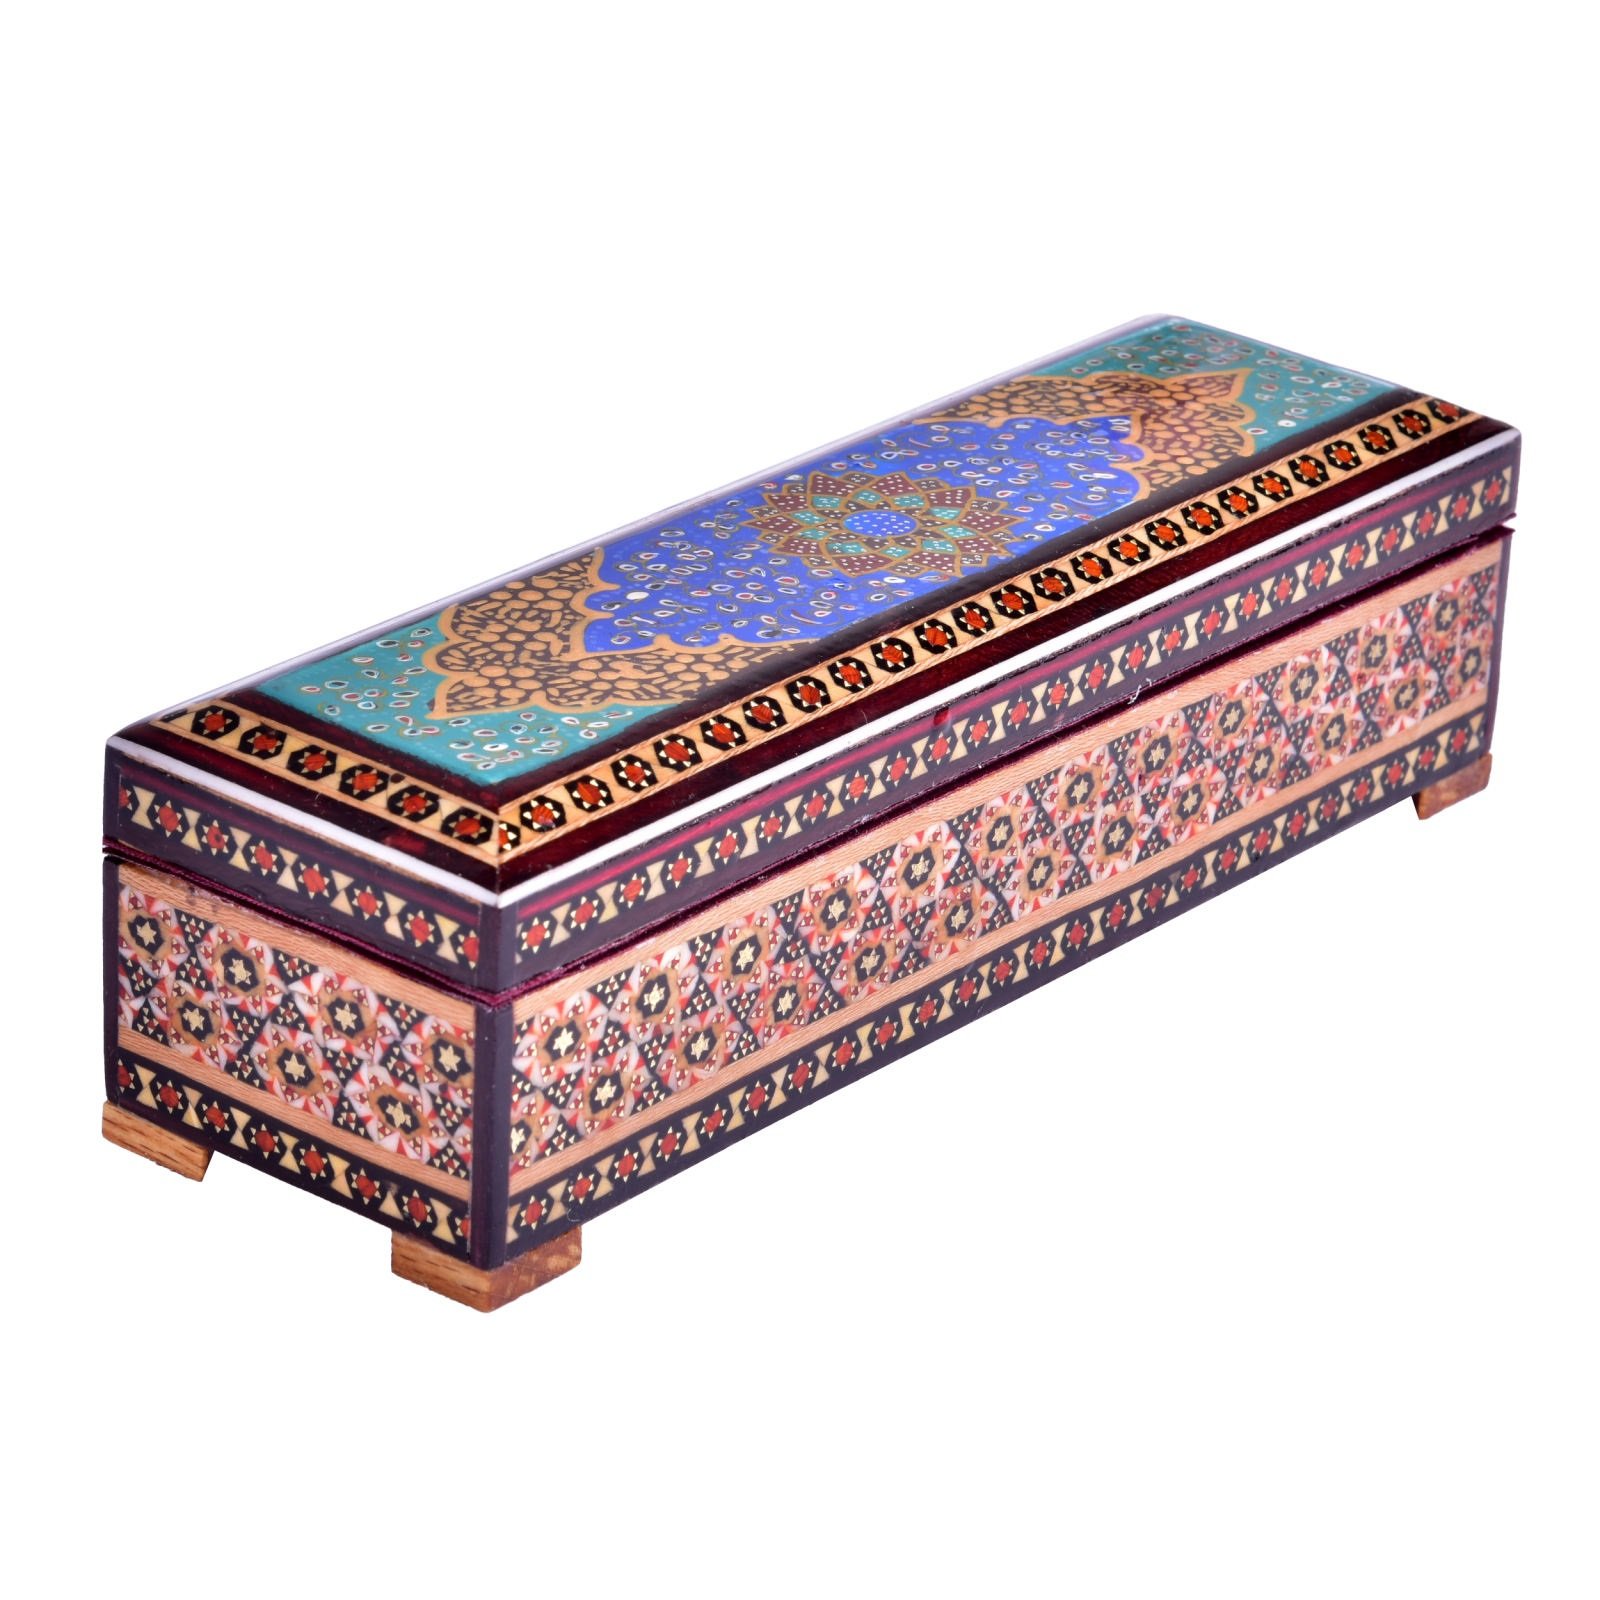 Khatam Jewelry box code SA2006 , Khatam box, Inlaid, Khatam Jewelry box, Khatam